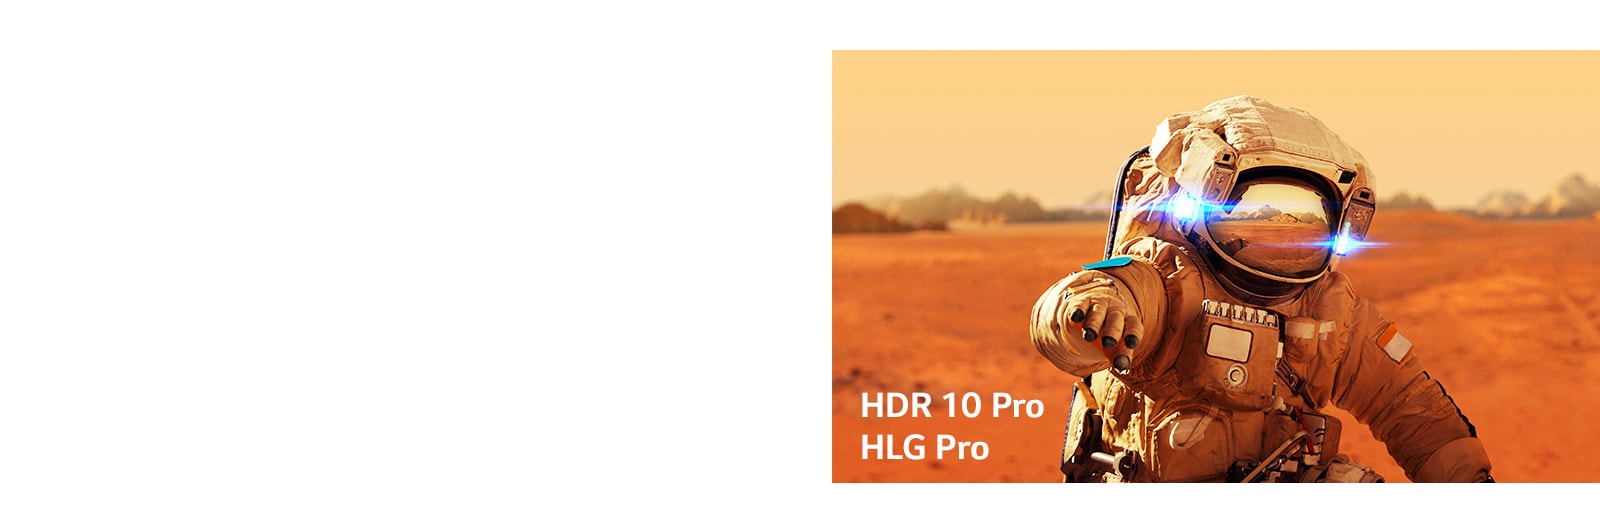 Inserti Marvel Iron Man con logo HLG pro e HDR 10 Pro